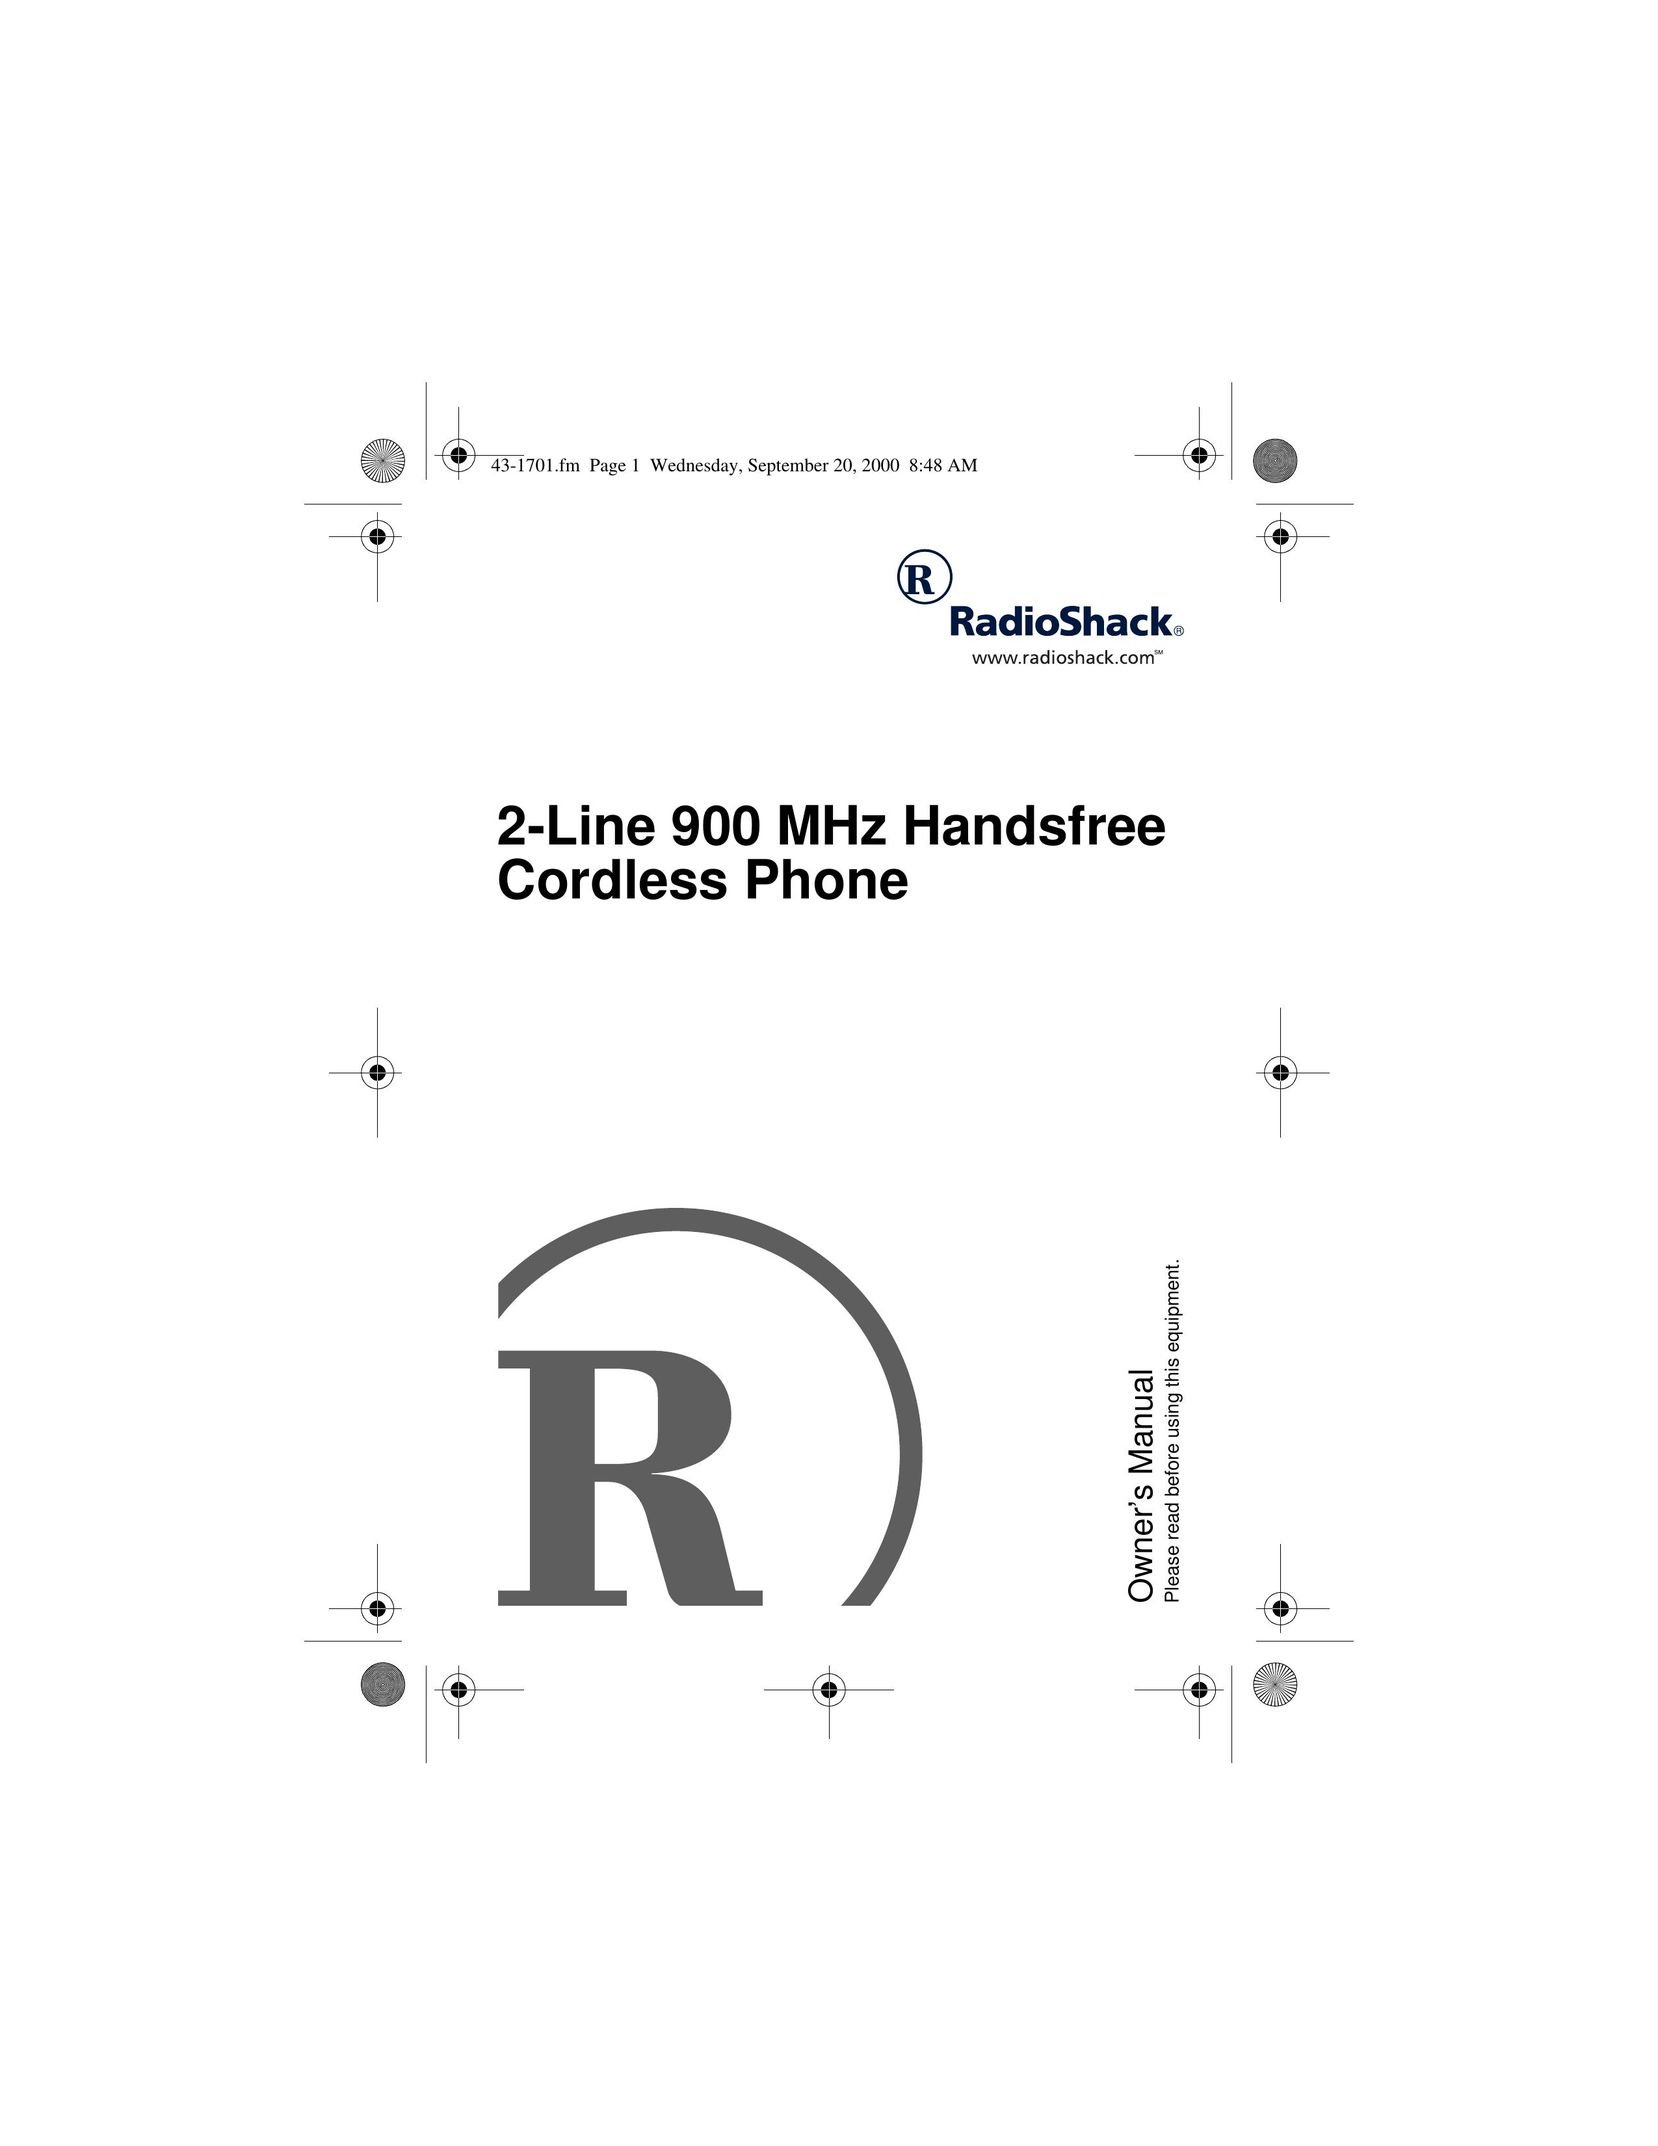 Radio Shack 2-Line 900 MHz Handsfree Cordless Phone Cordless Telephone User Manual